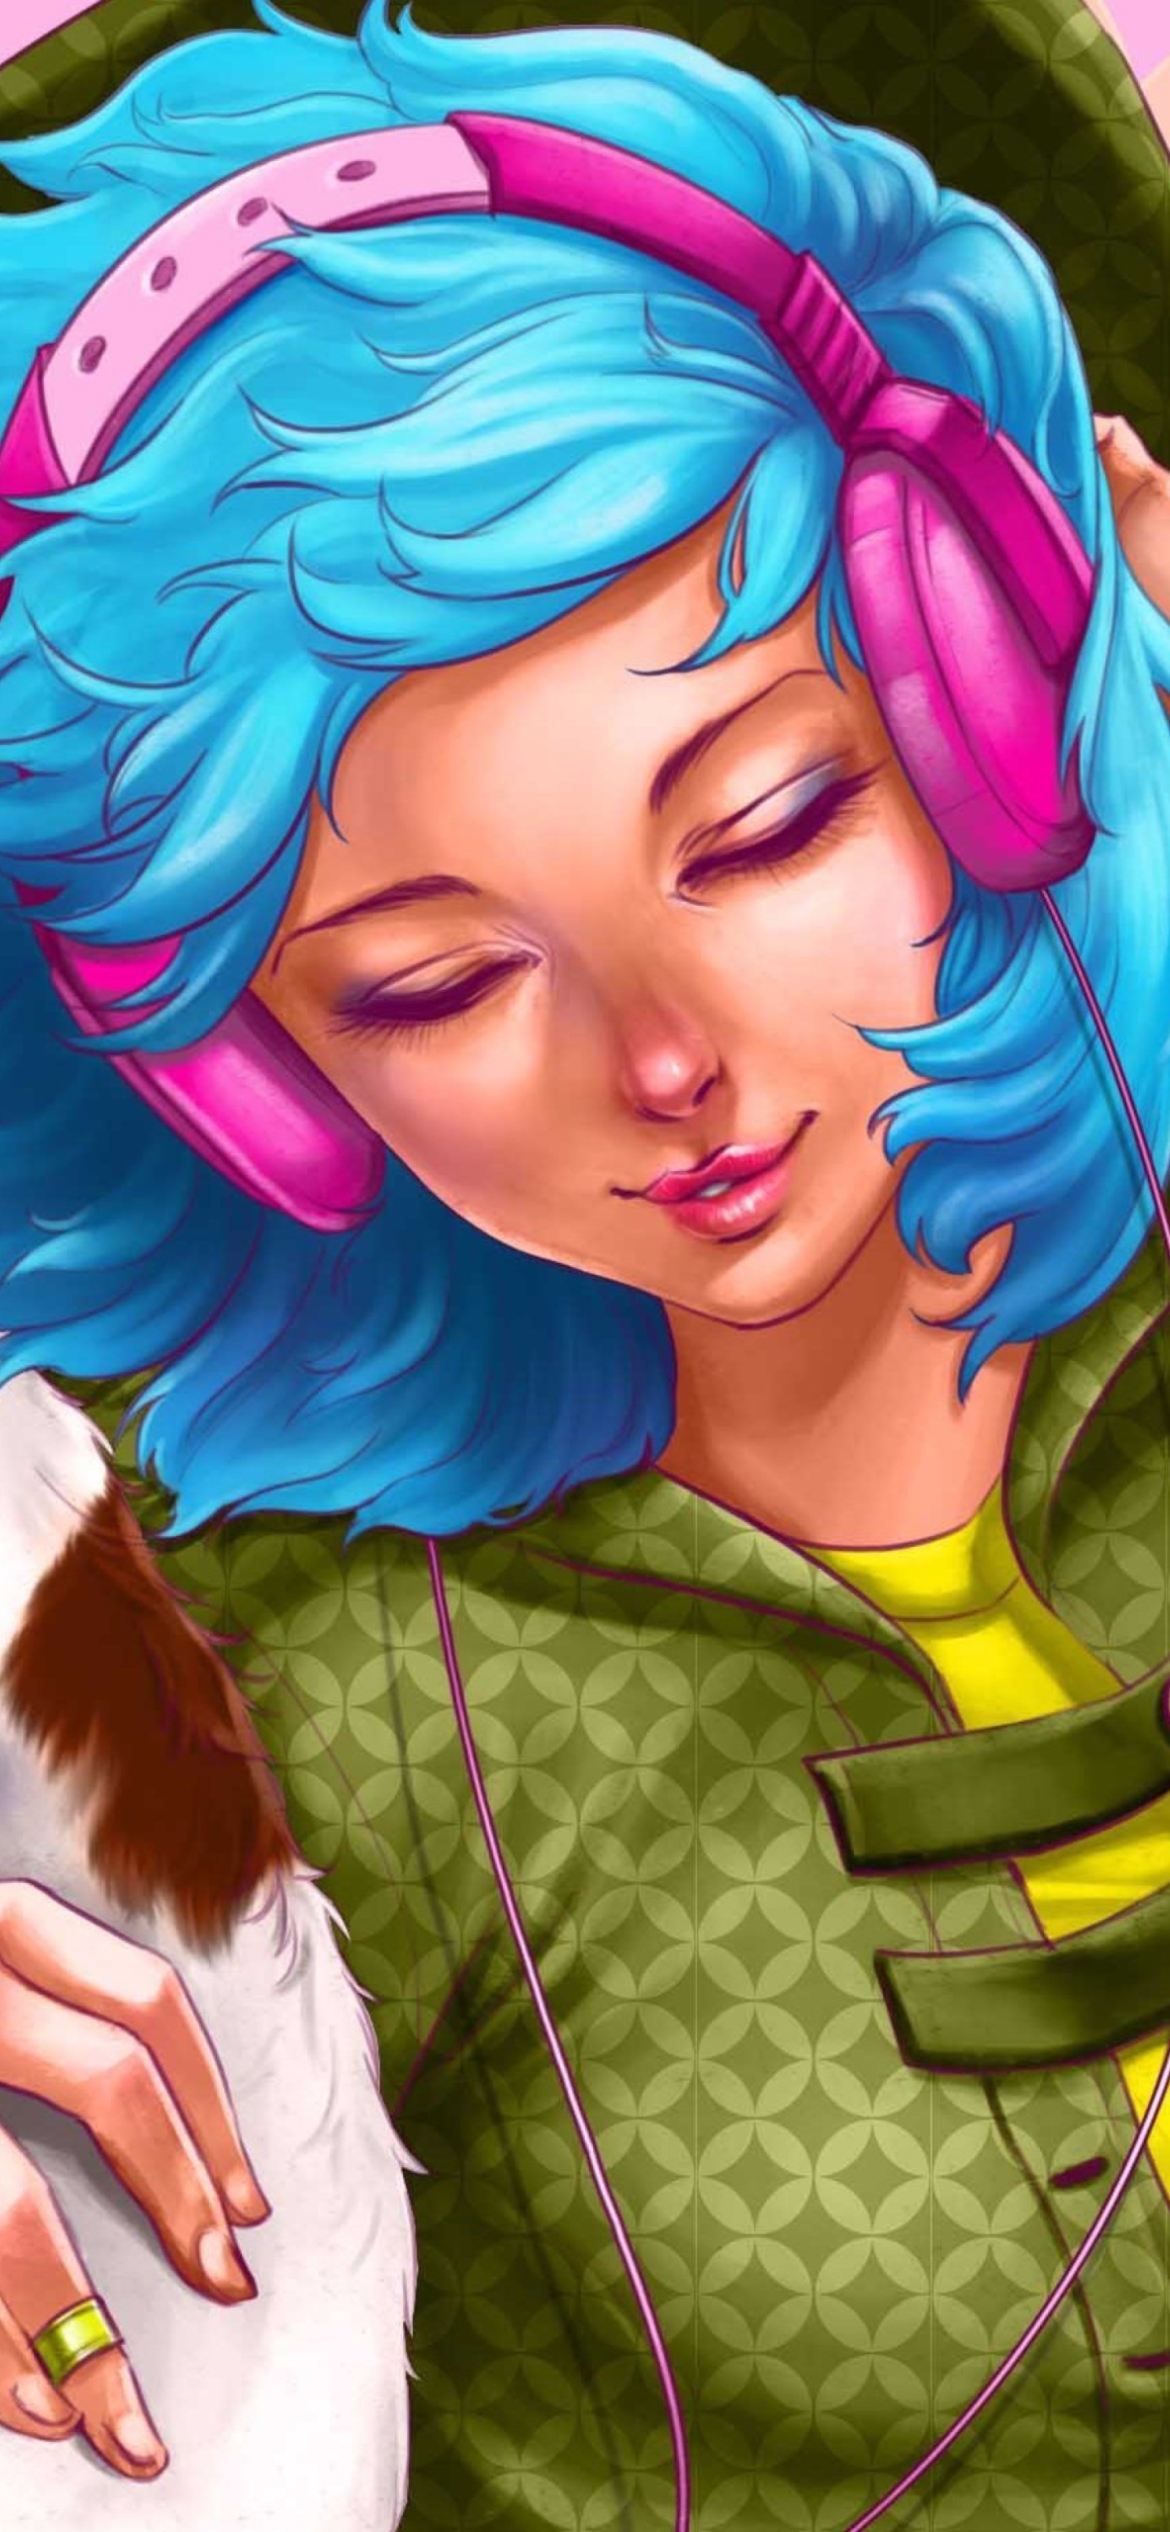 Обои Girl With Blue Hair And Pink Headphones Drawing 1170x2532